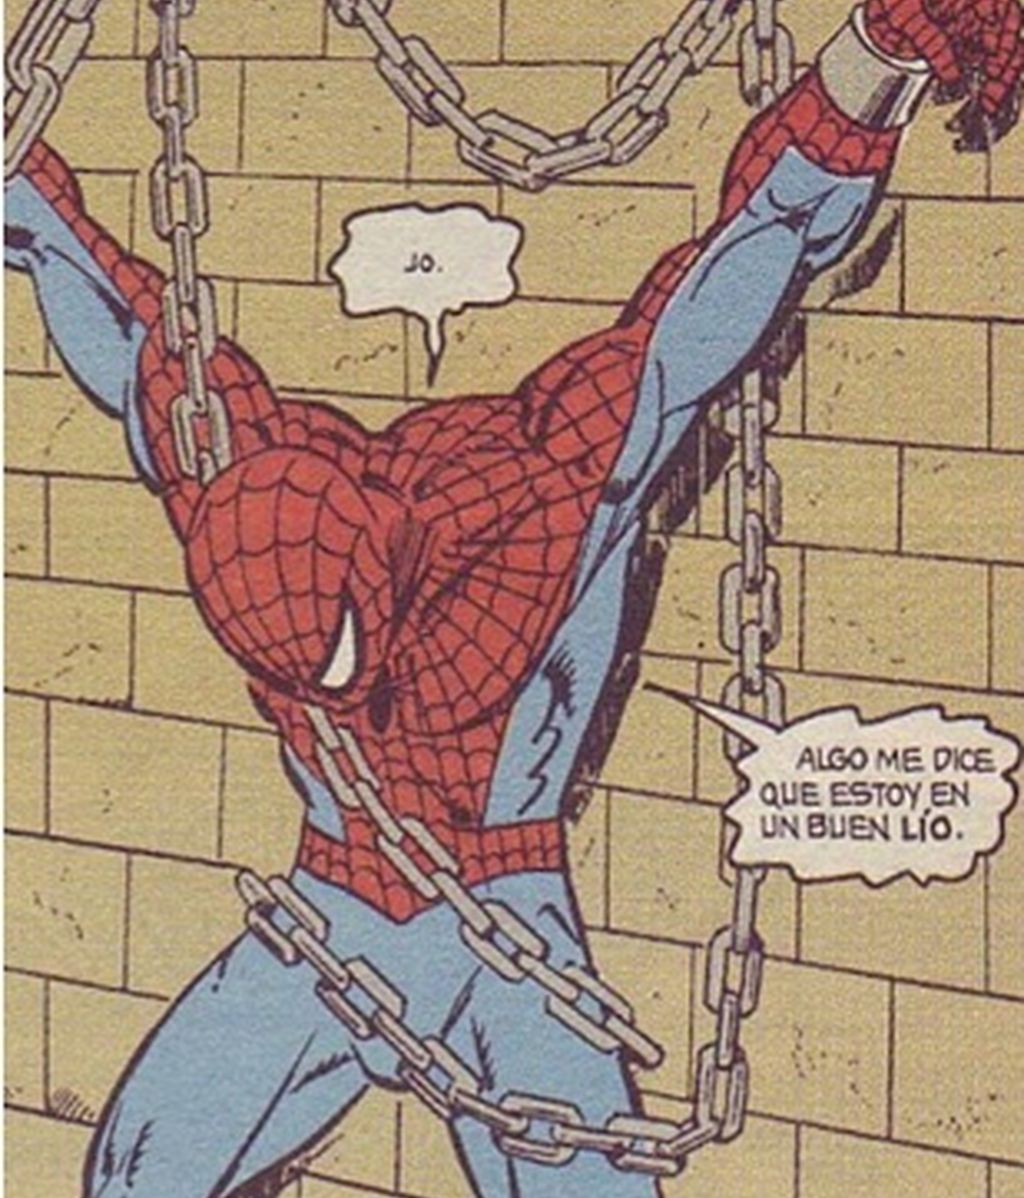 Spiderman, Inma Coronel